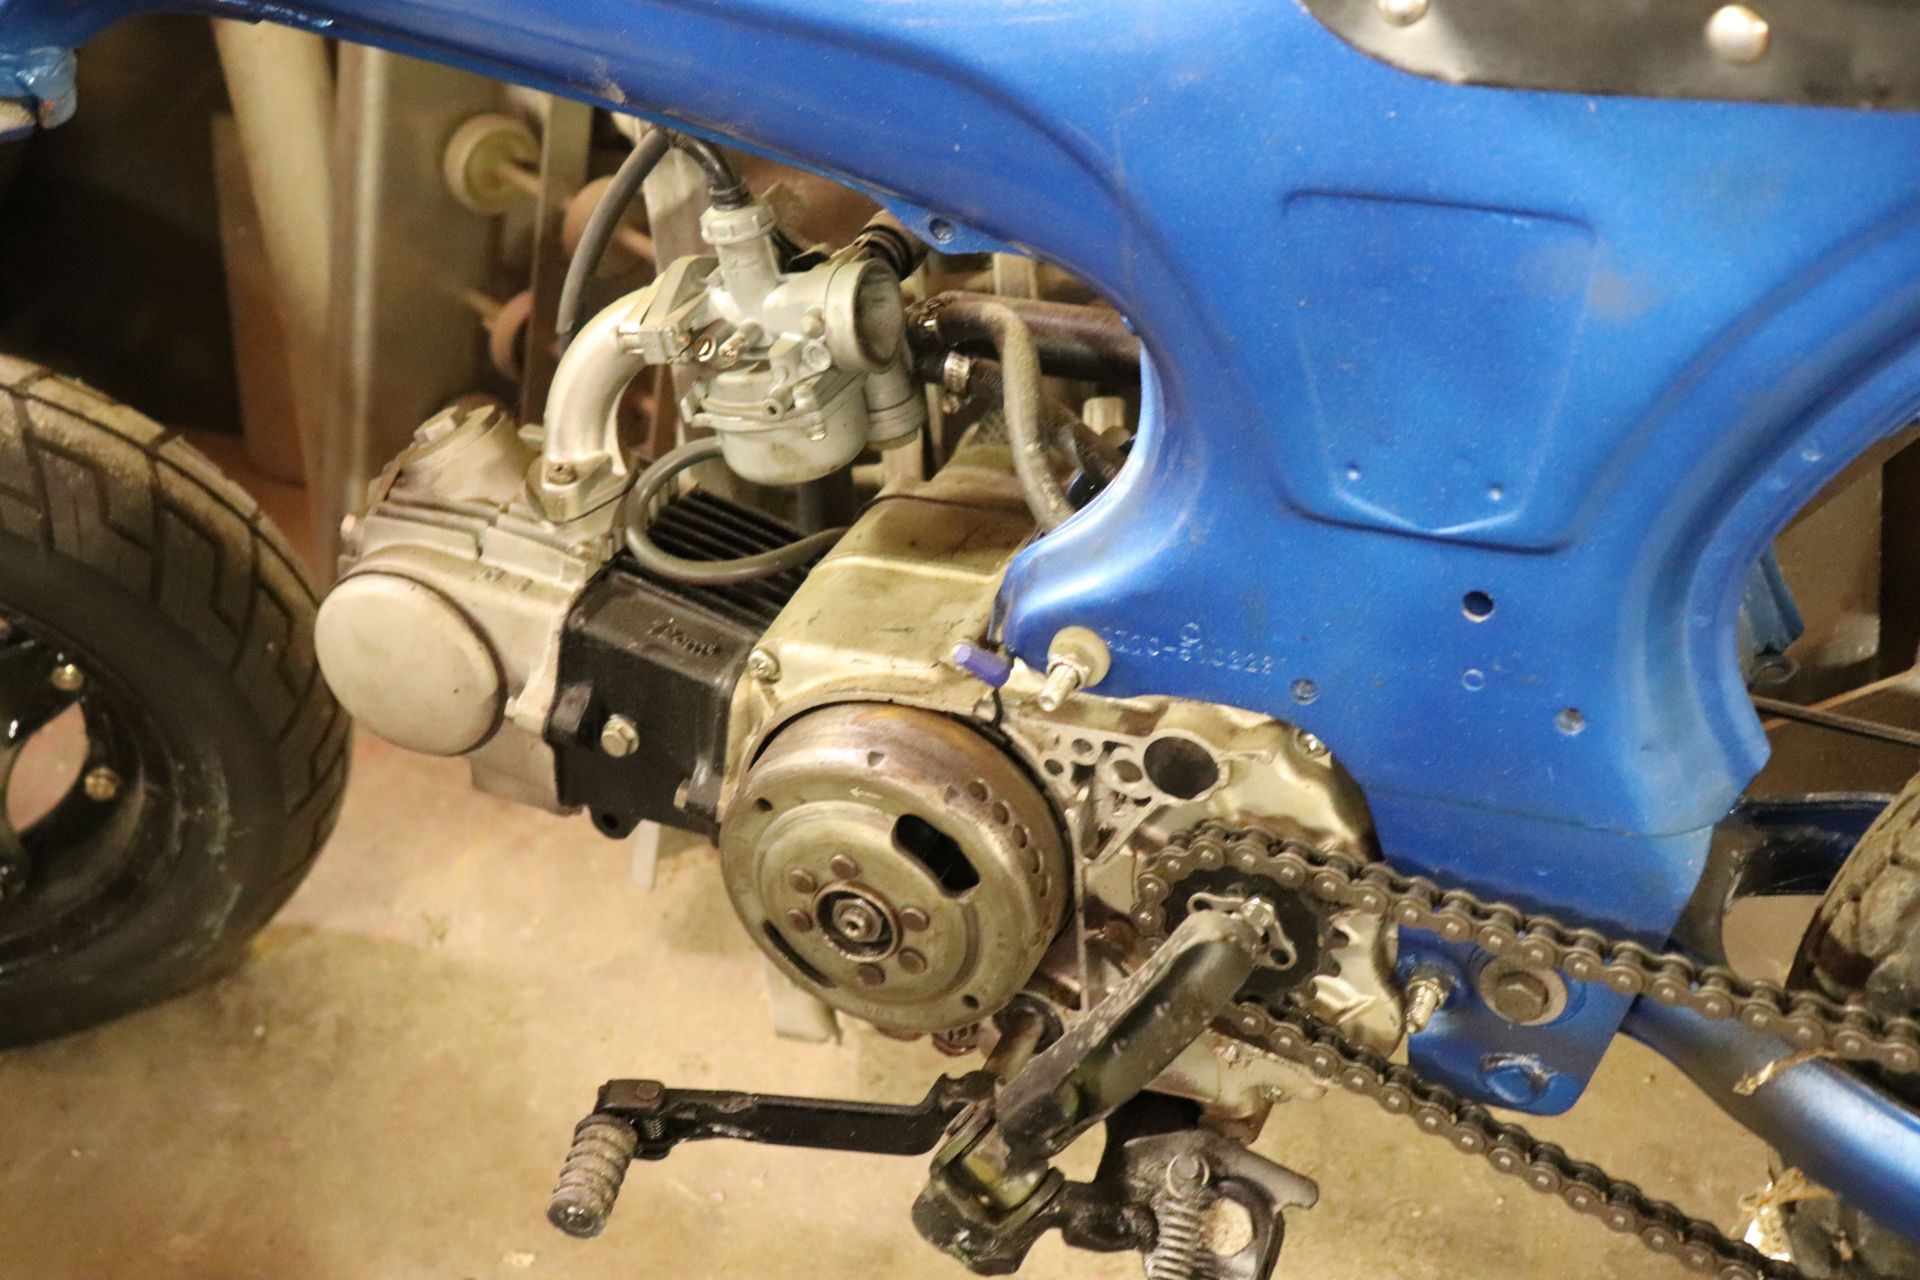 Honda mini bike, parts bike, 72cm cubic engine - Image 2 of 6